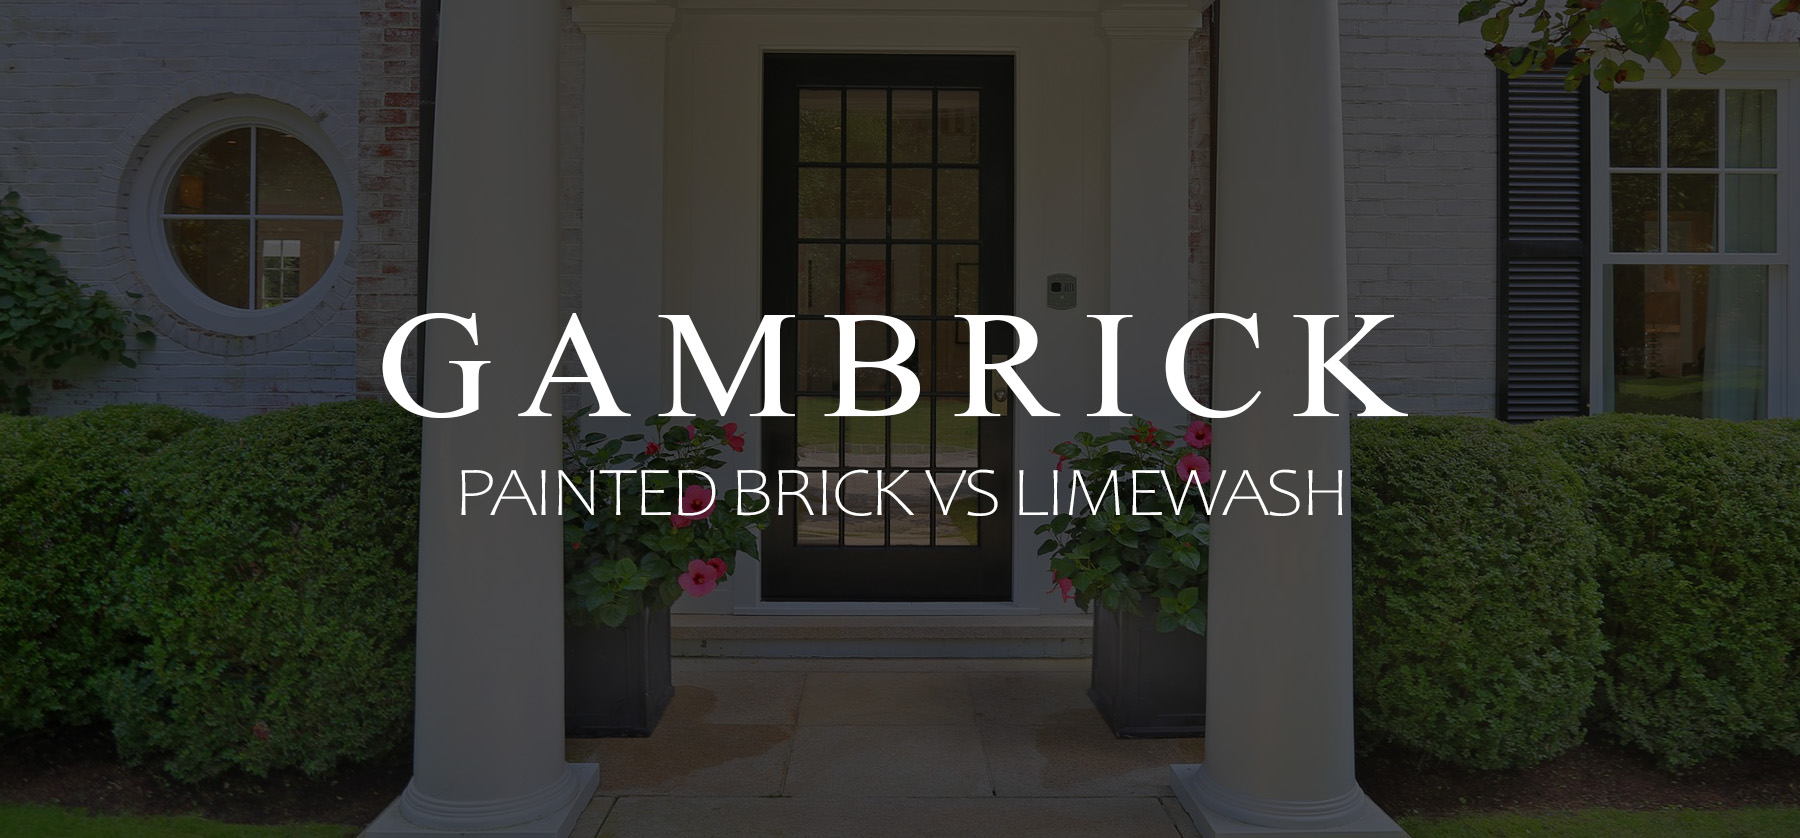 Painted brick vs limewash banner 1